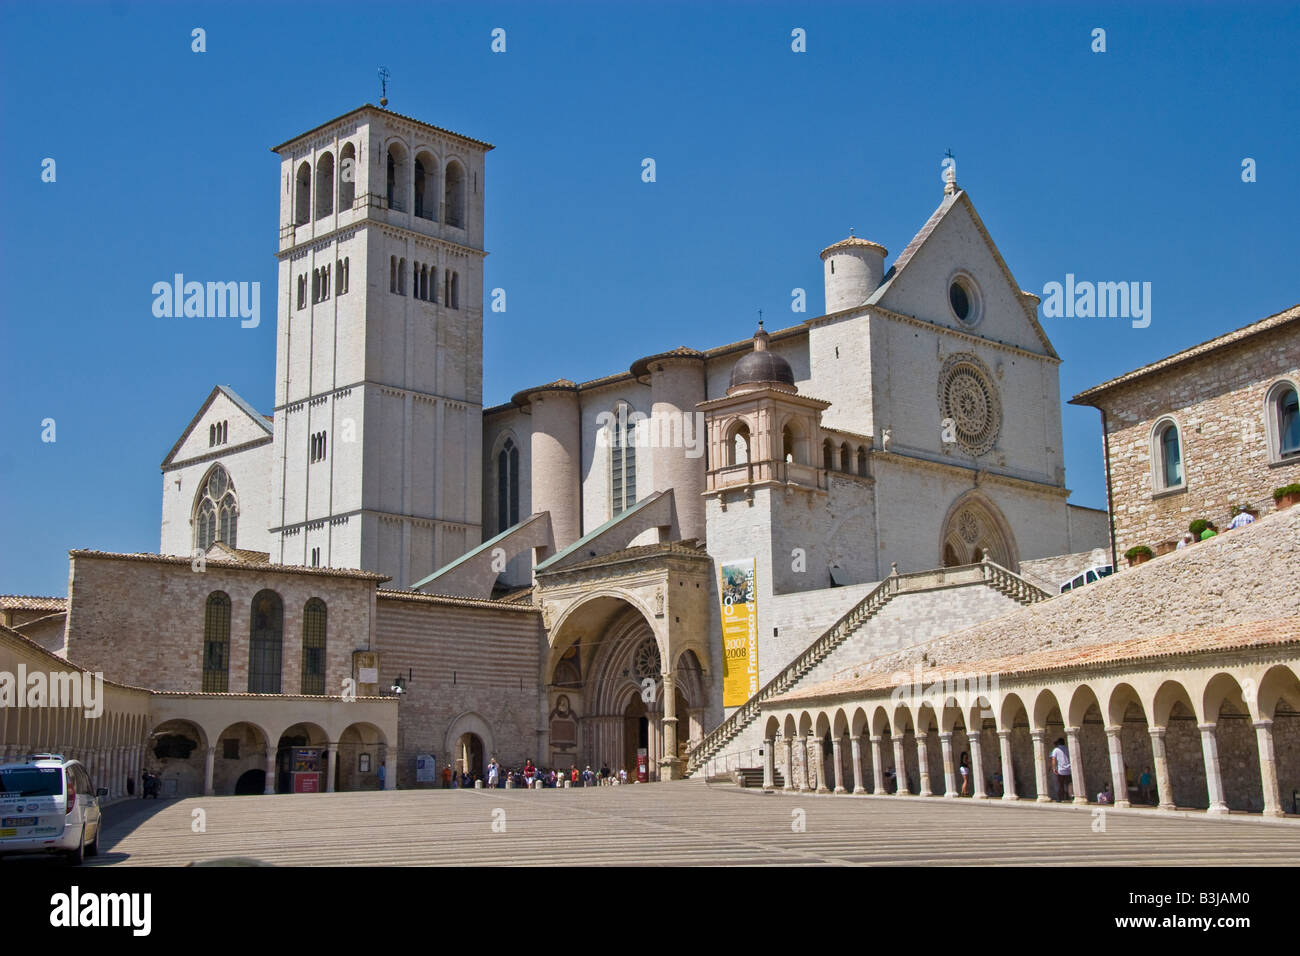 Italien Umbrien Assisi Basilika Kirche San Francesco Franziskaner religiösen Heiligen Franz von Assisi Erdbeben, quake Dach Coll Stockfoto